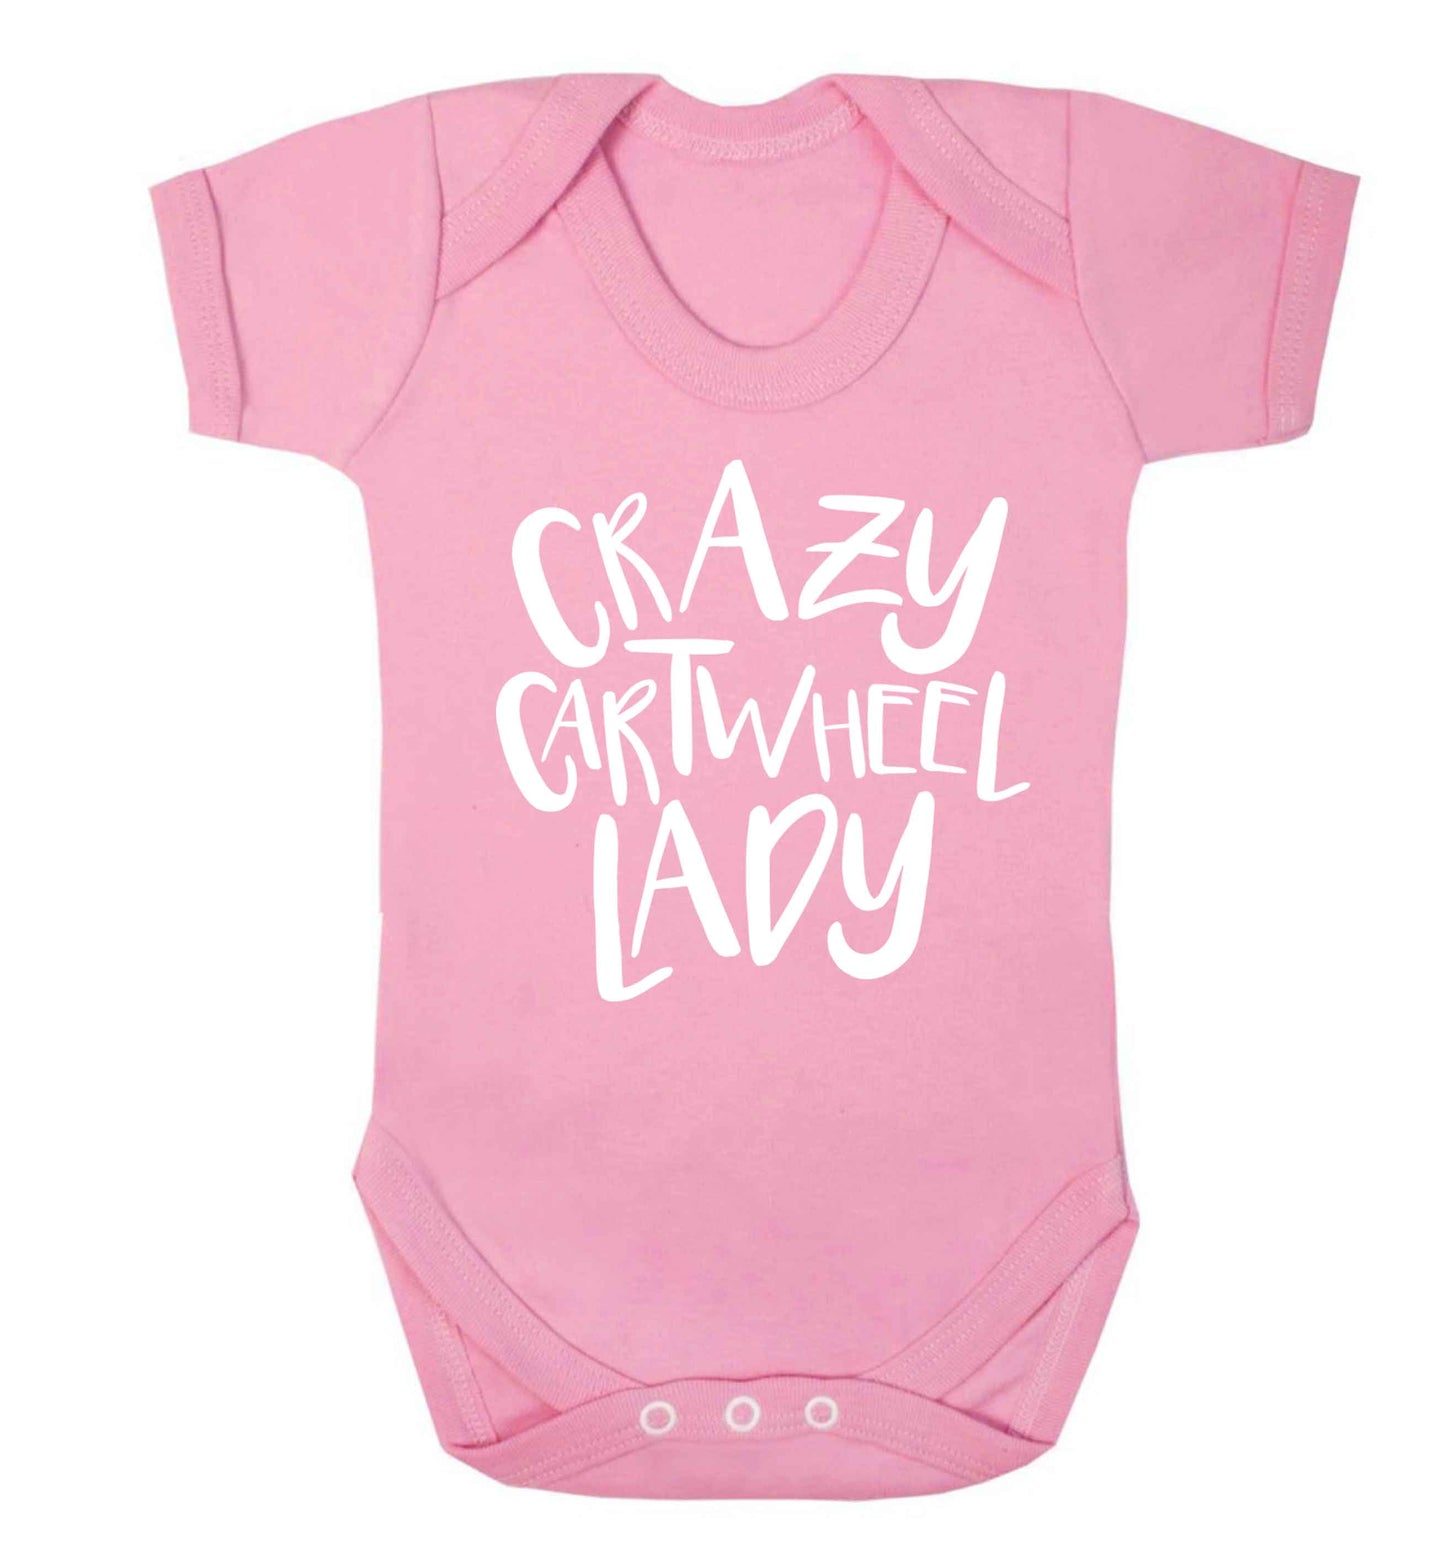 Crazy cartwheel lady Baby Vest pale pink 18-24 months